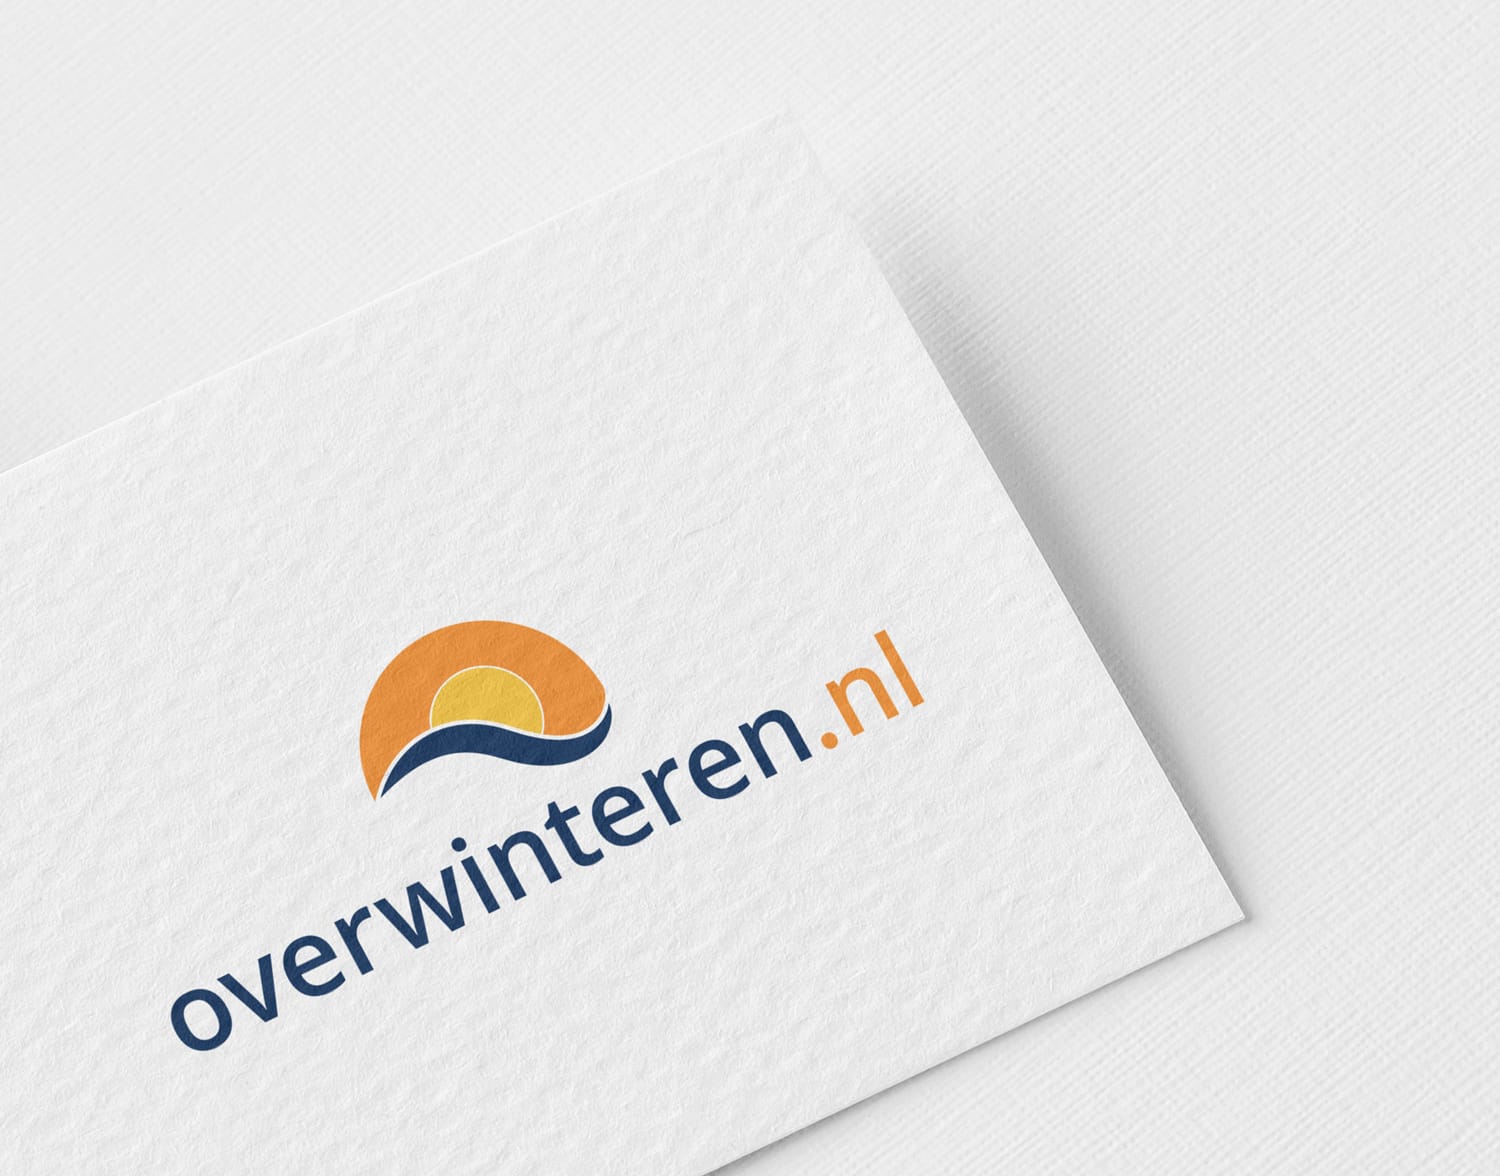 Travel website logo design